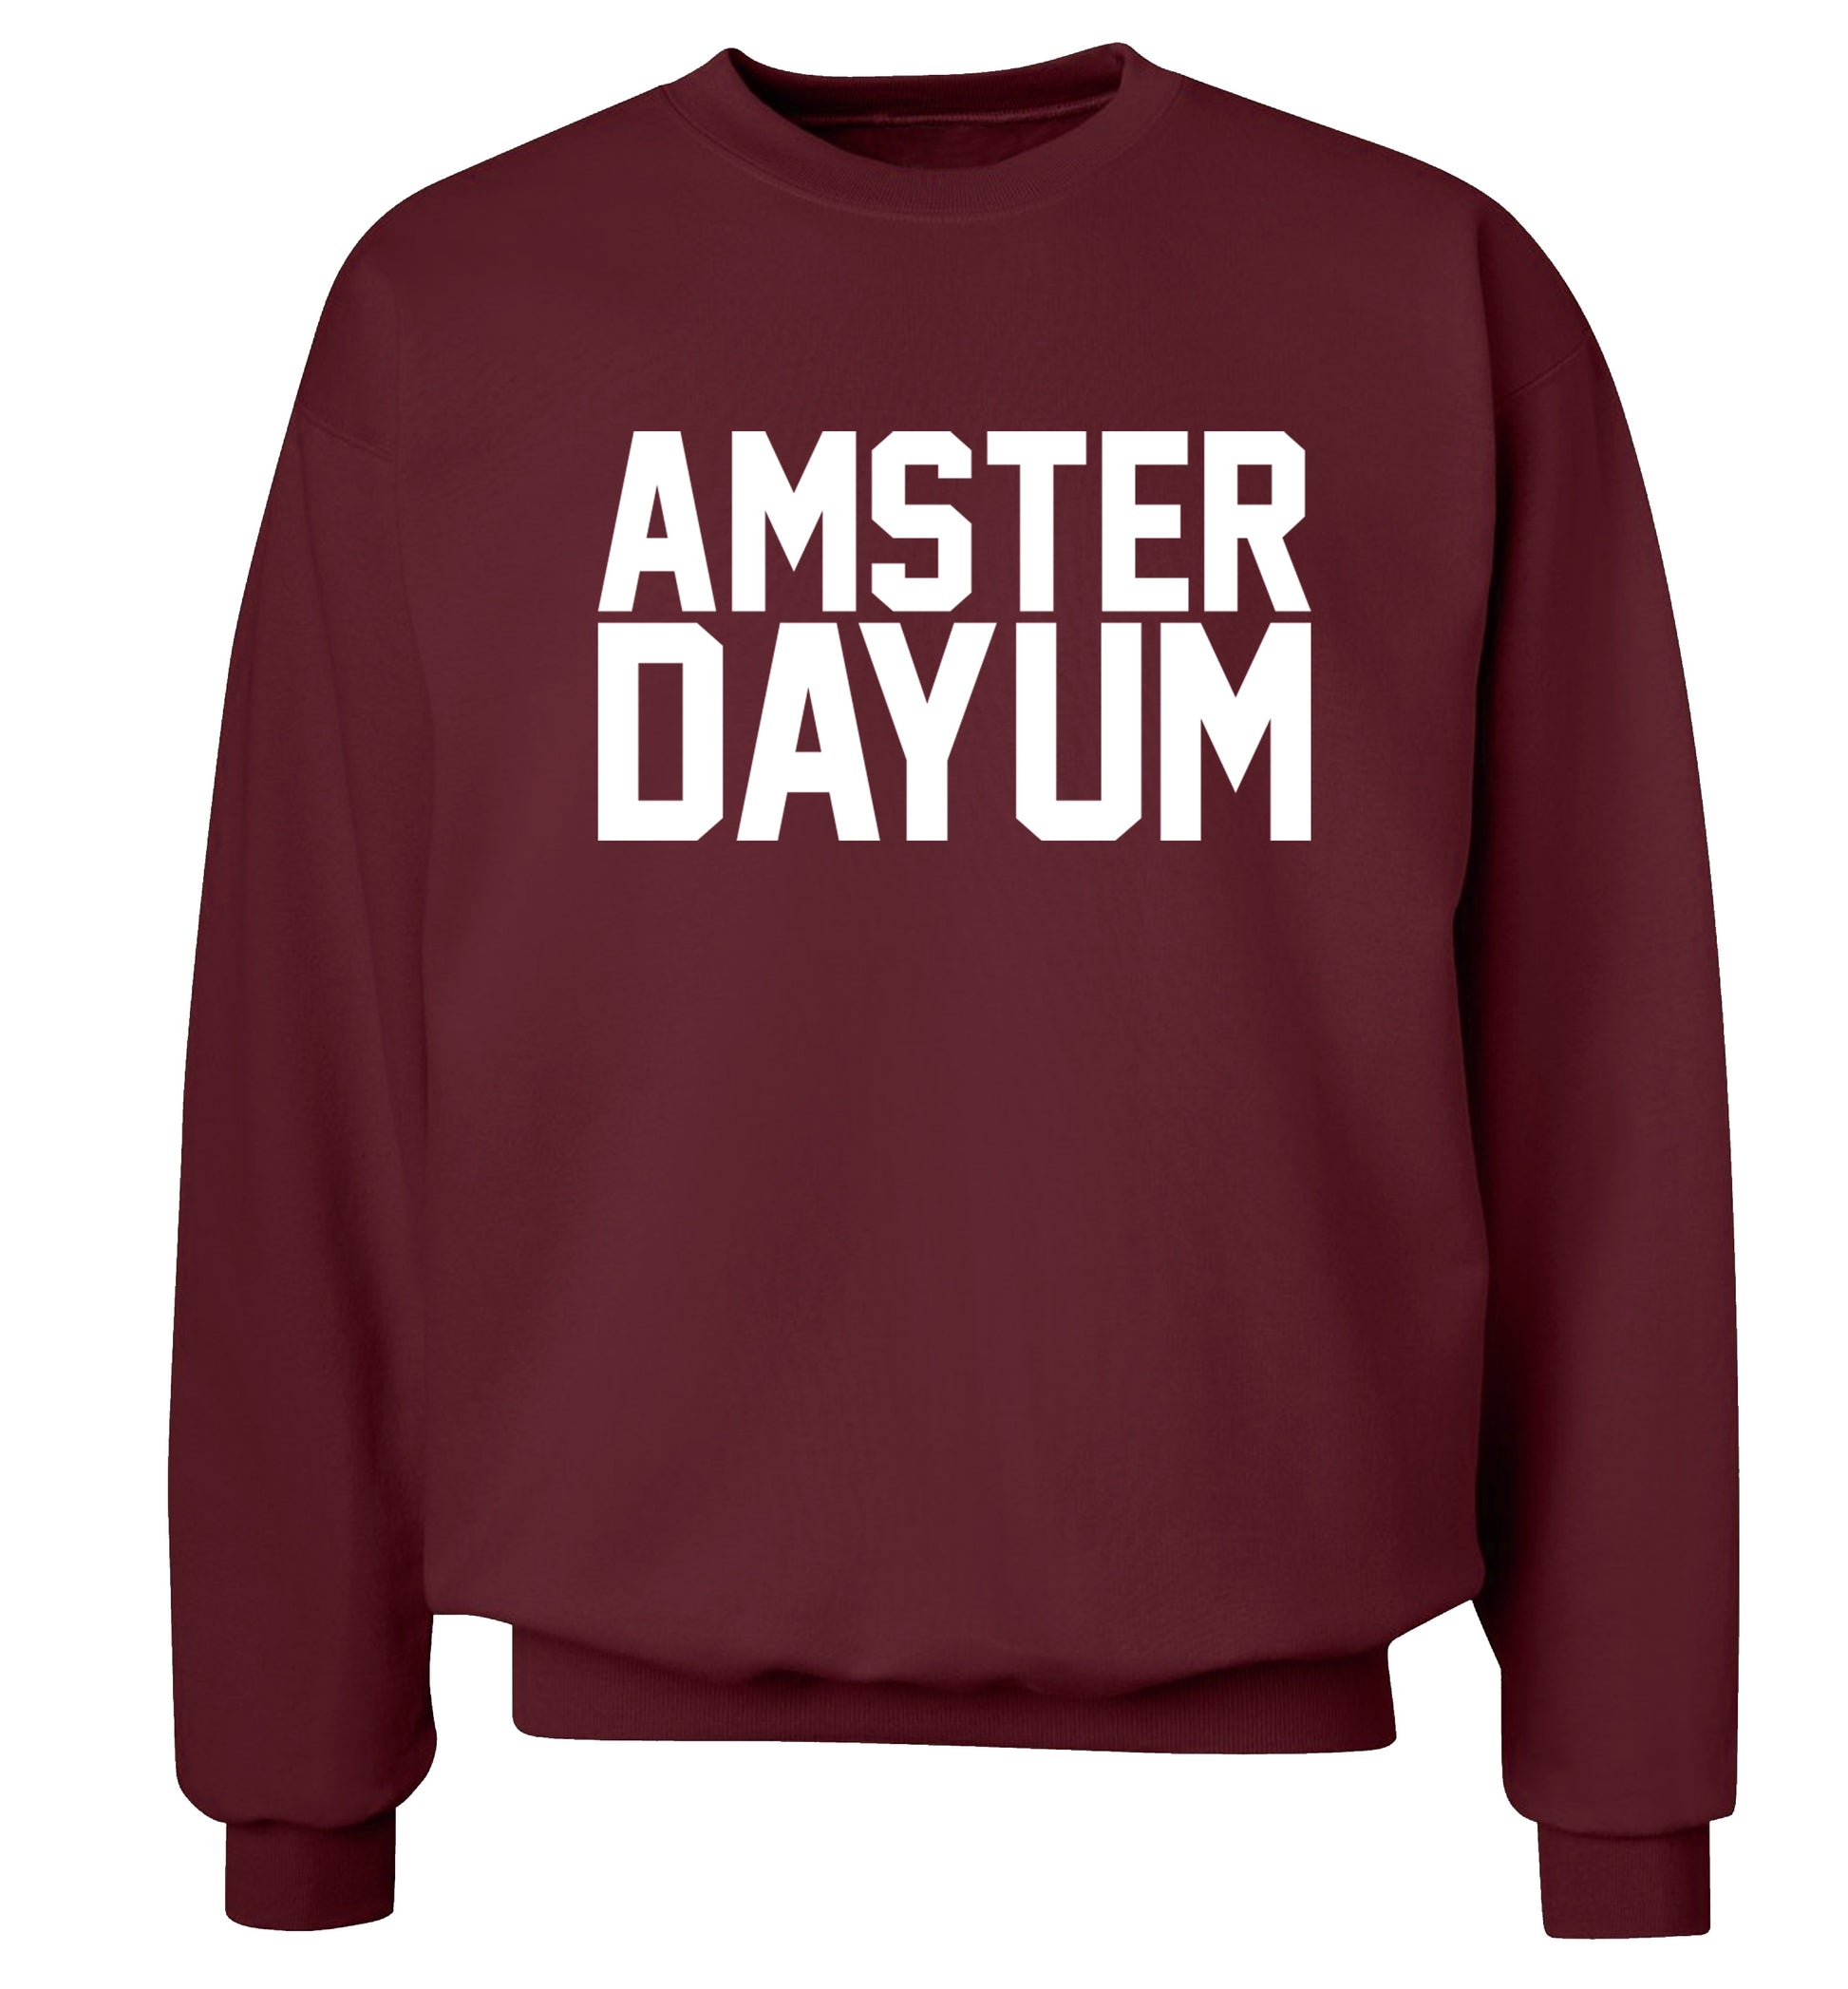 Amsterdayum Adult's unisex maroon Sweater 2XL